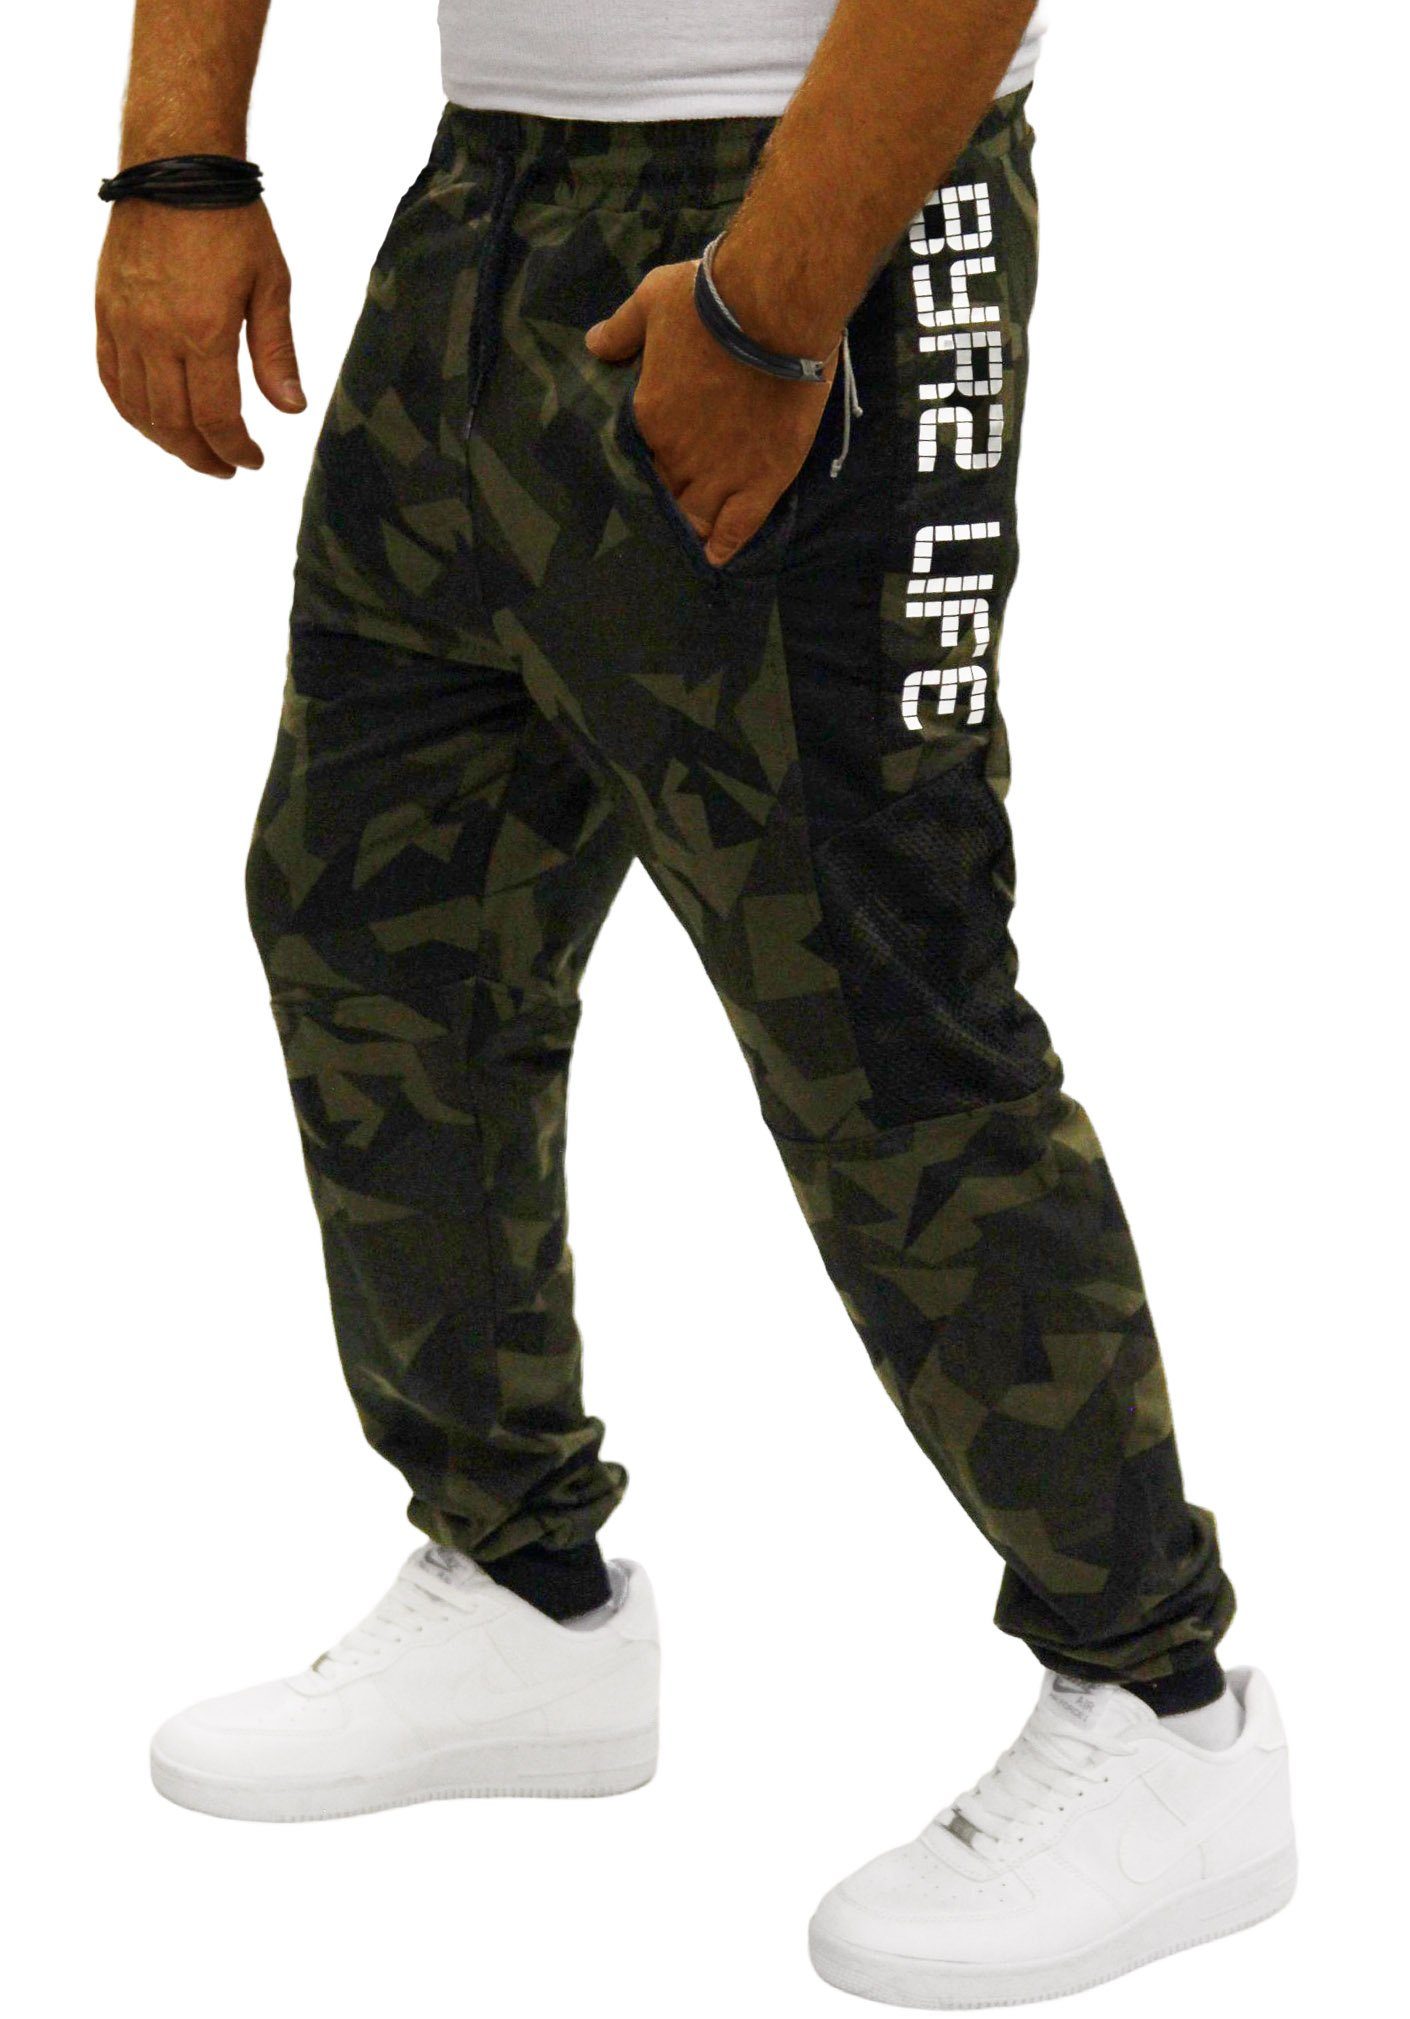 Camou-Karo Trainingshose RMK Hose Jogginghose Tarn Camouflage (H.79) Herren Sporthose Army Fitnesshose